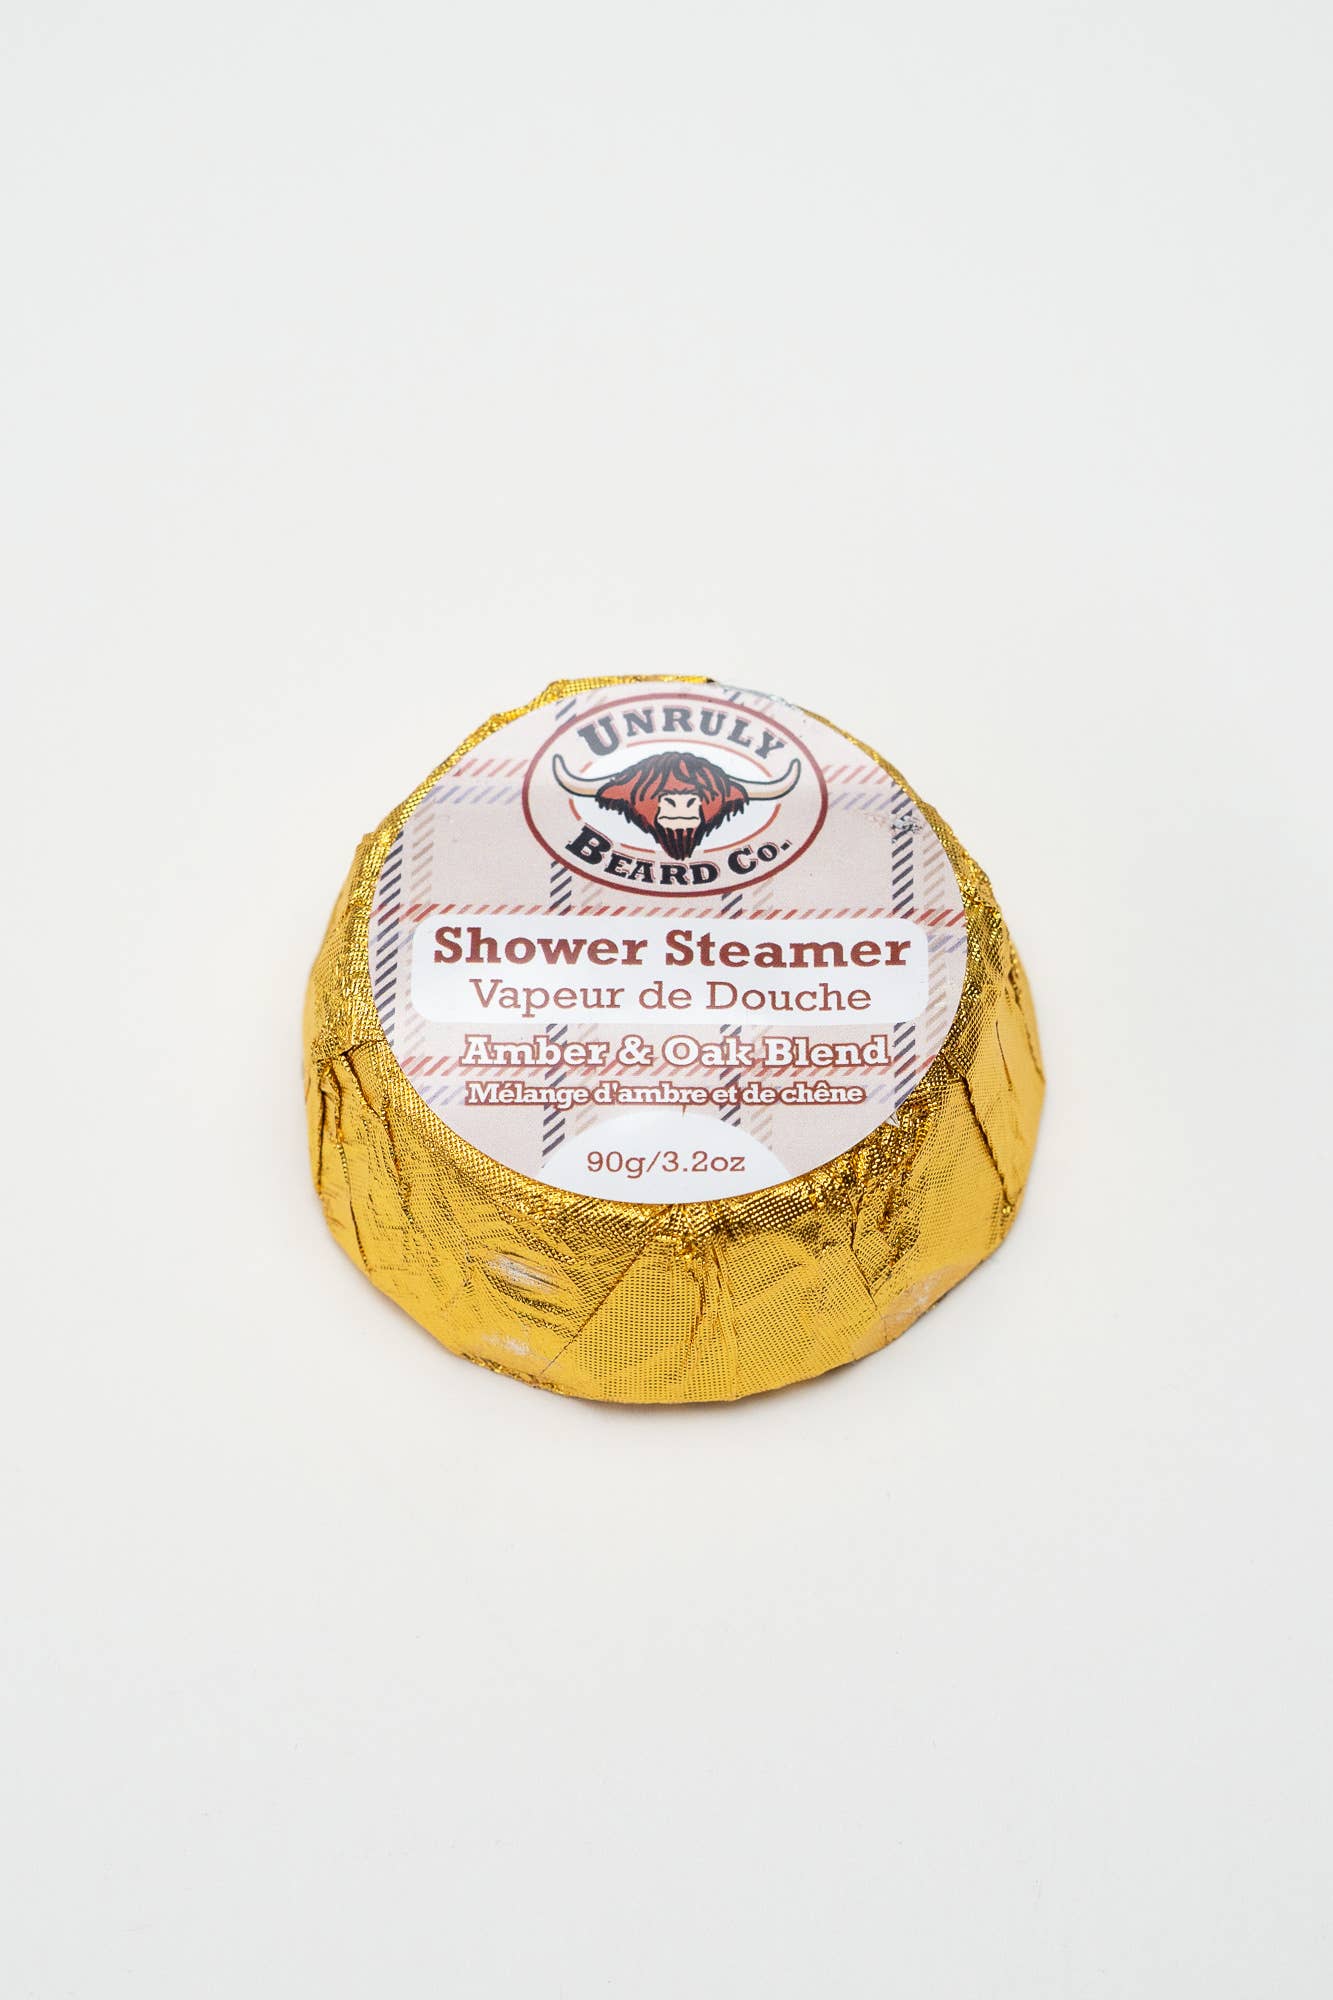 unruly beard shower steamer amber & oak blend